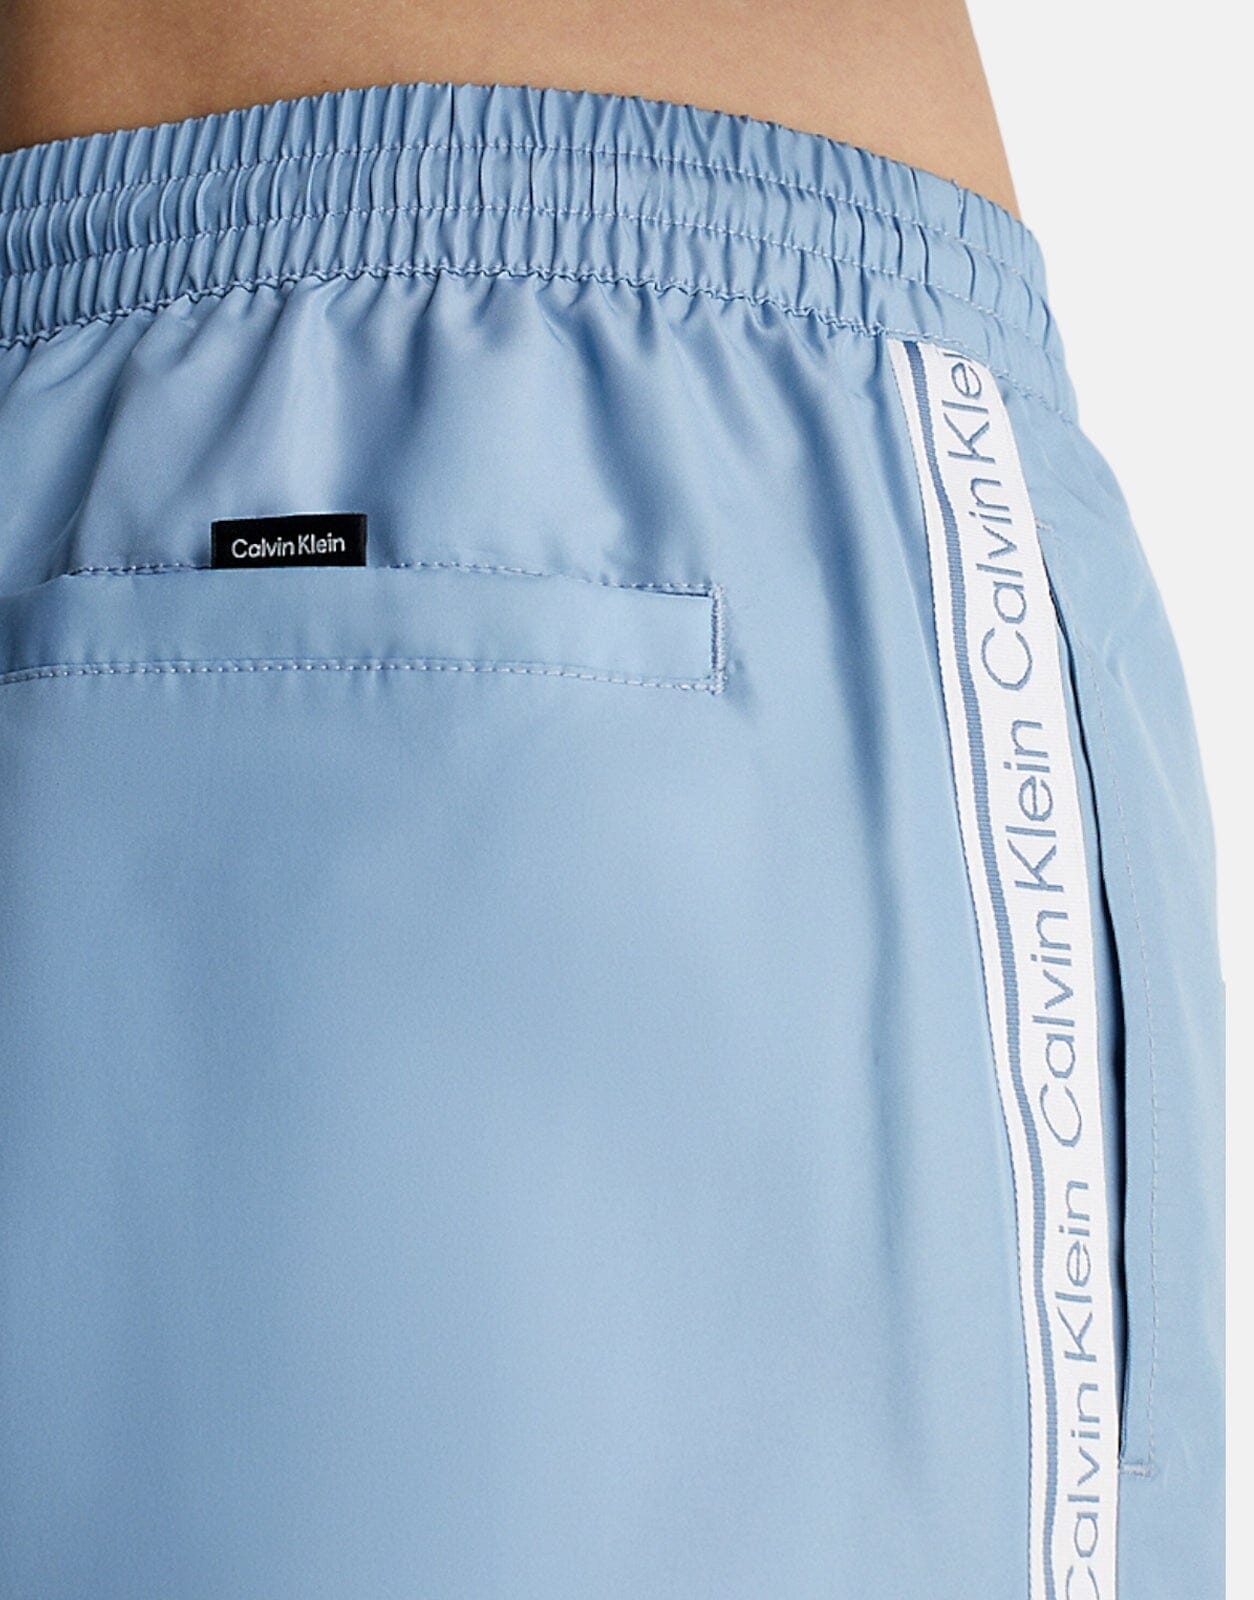 Calvin Klein Medium Length Blue Shorts - Subwear